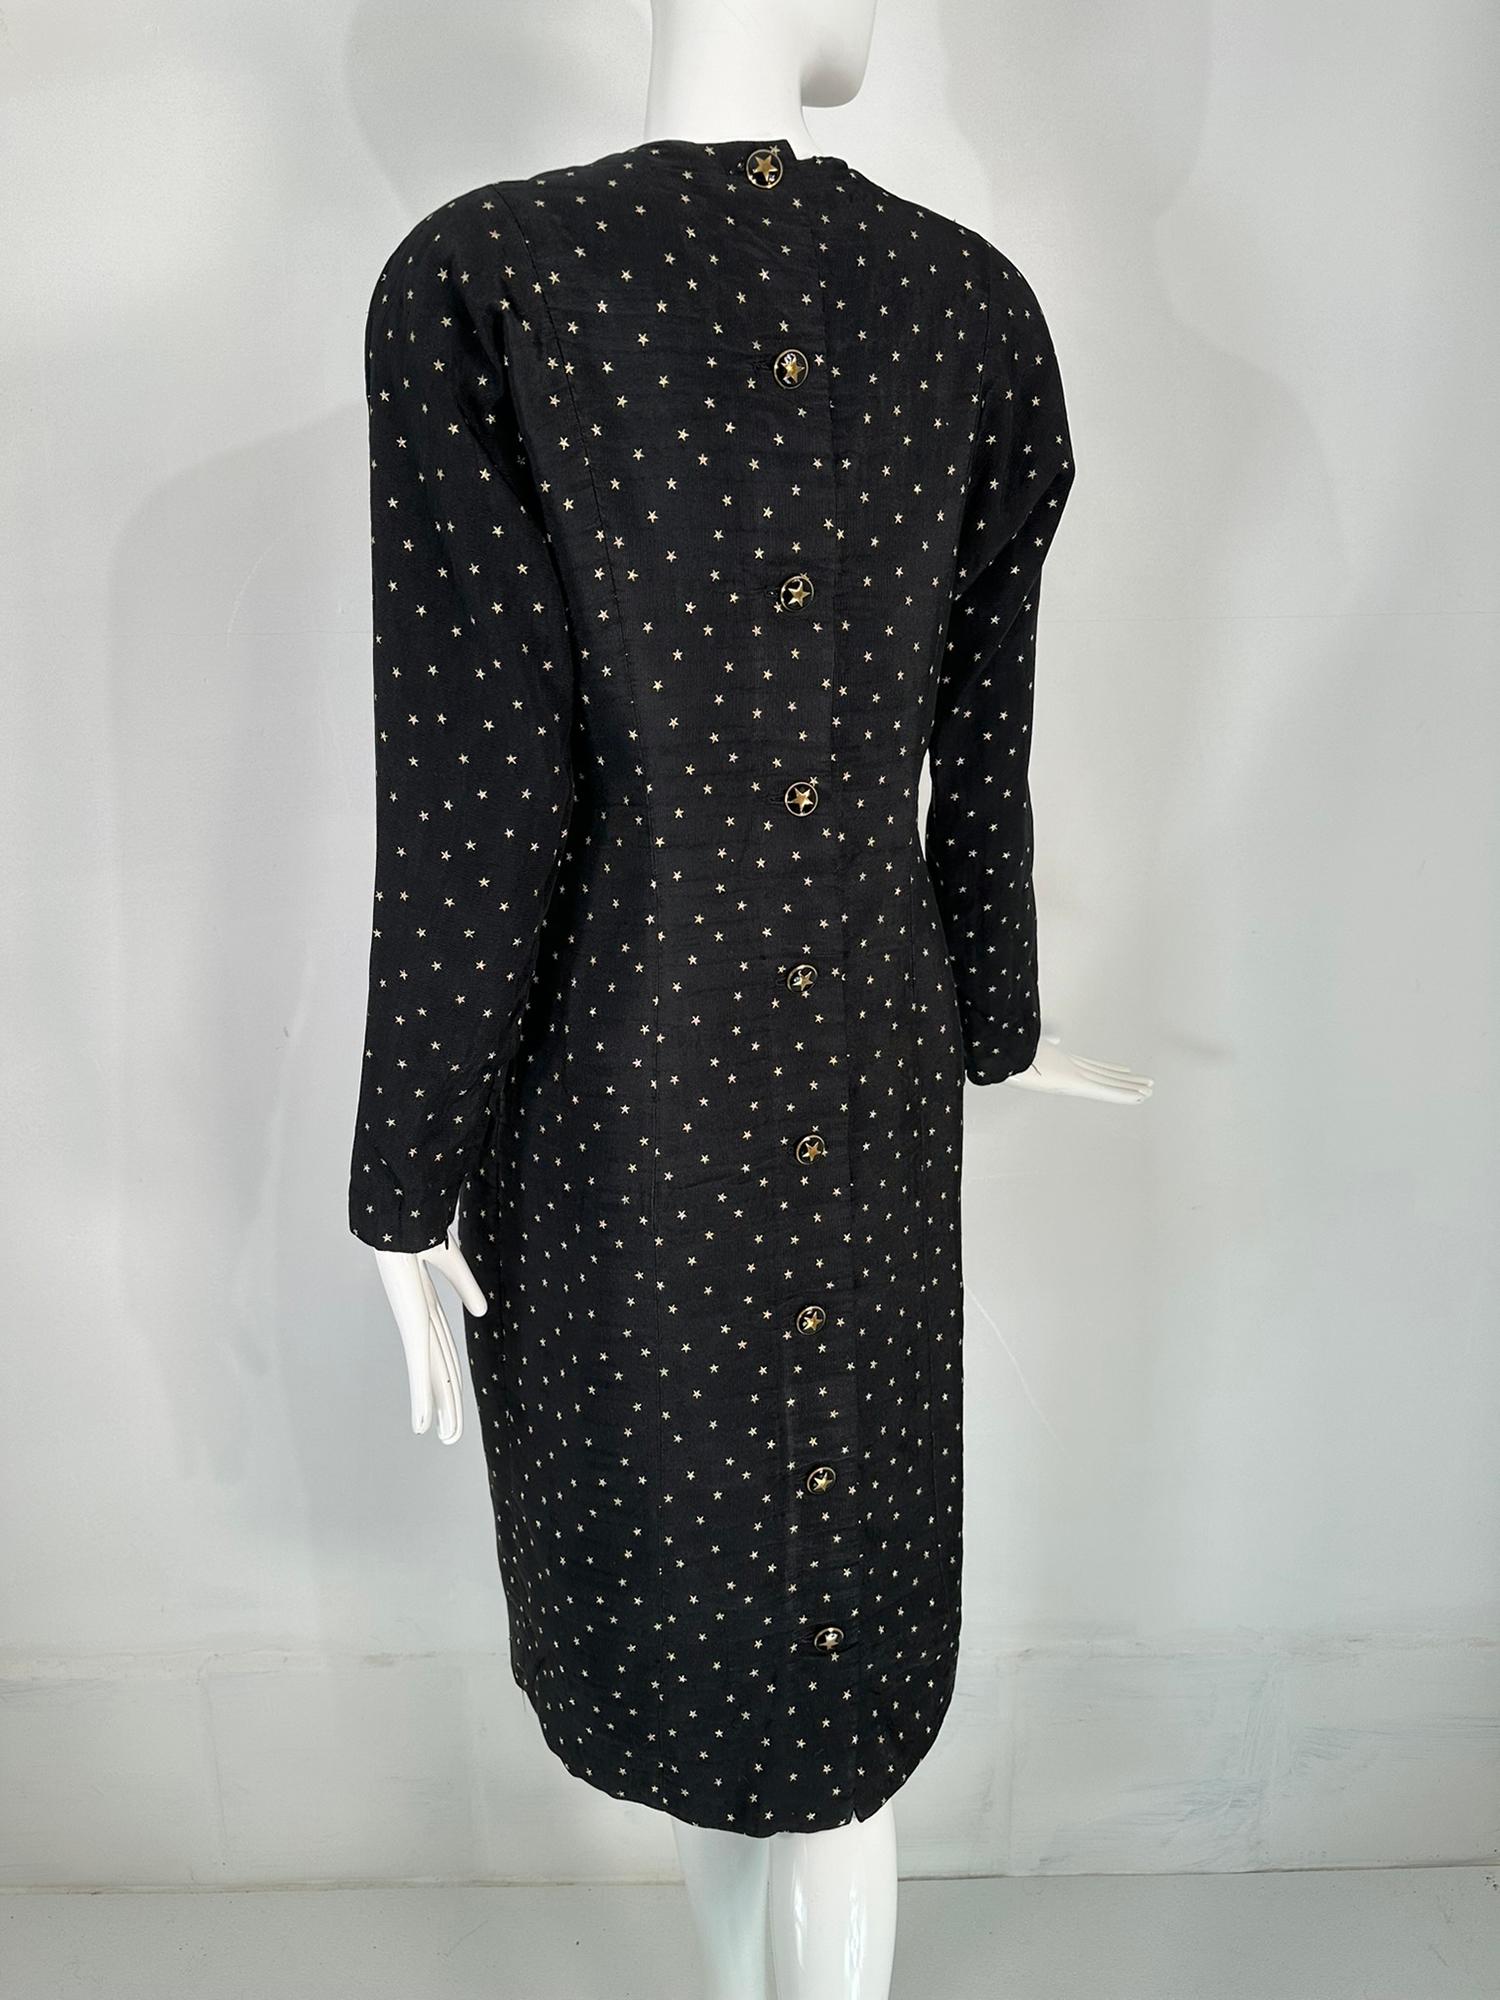 Geoffrey Beene Gold Stars on Black Faille Button Back Dress 1980s 3